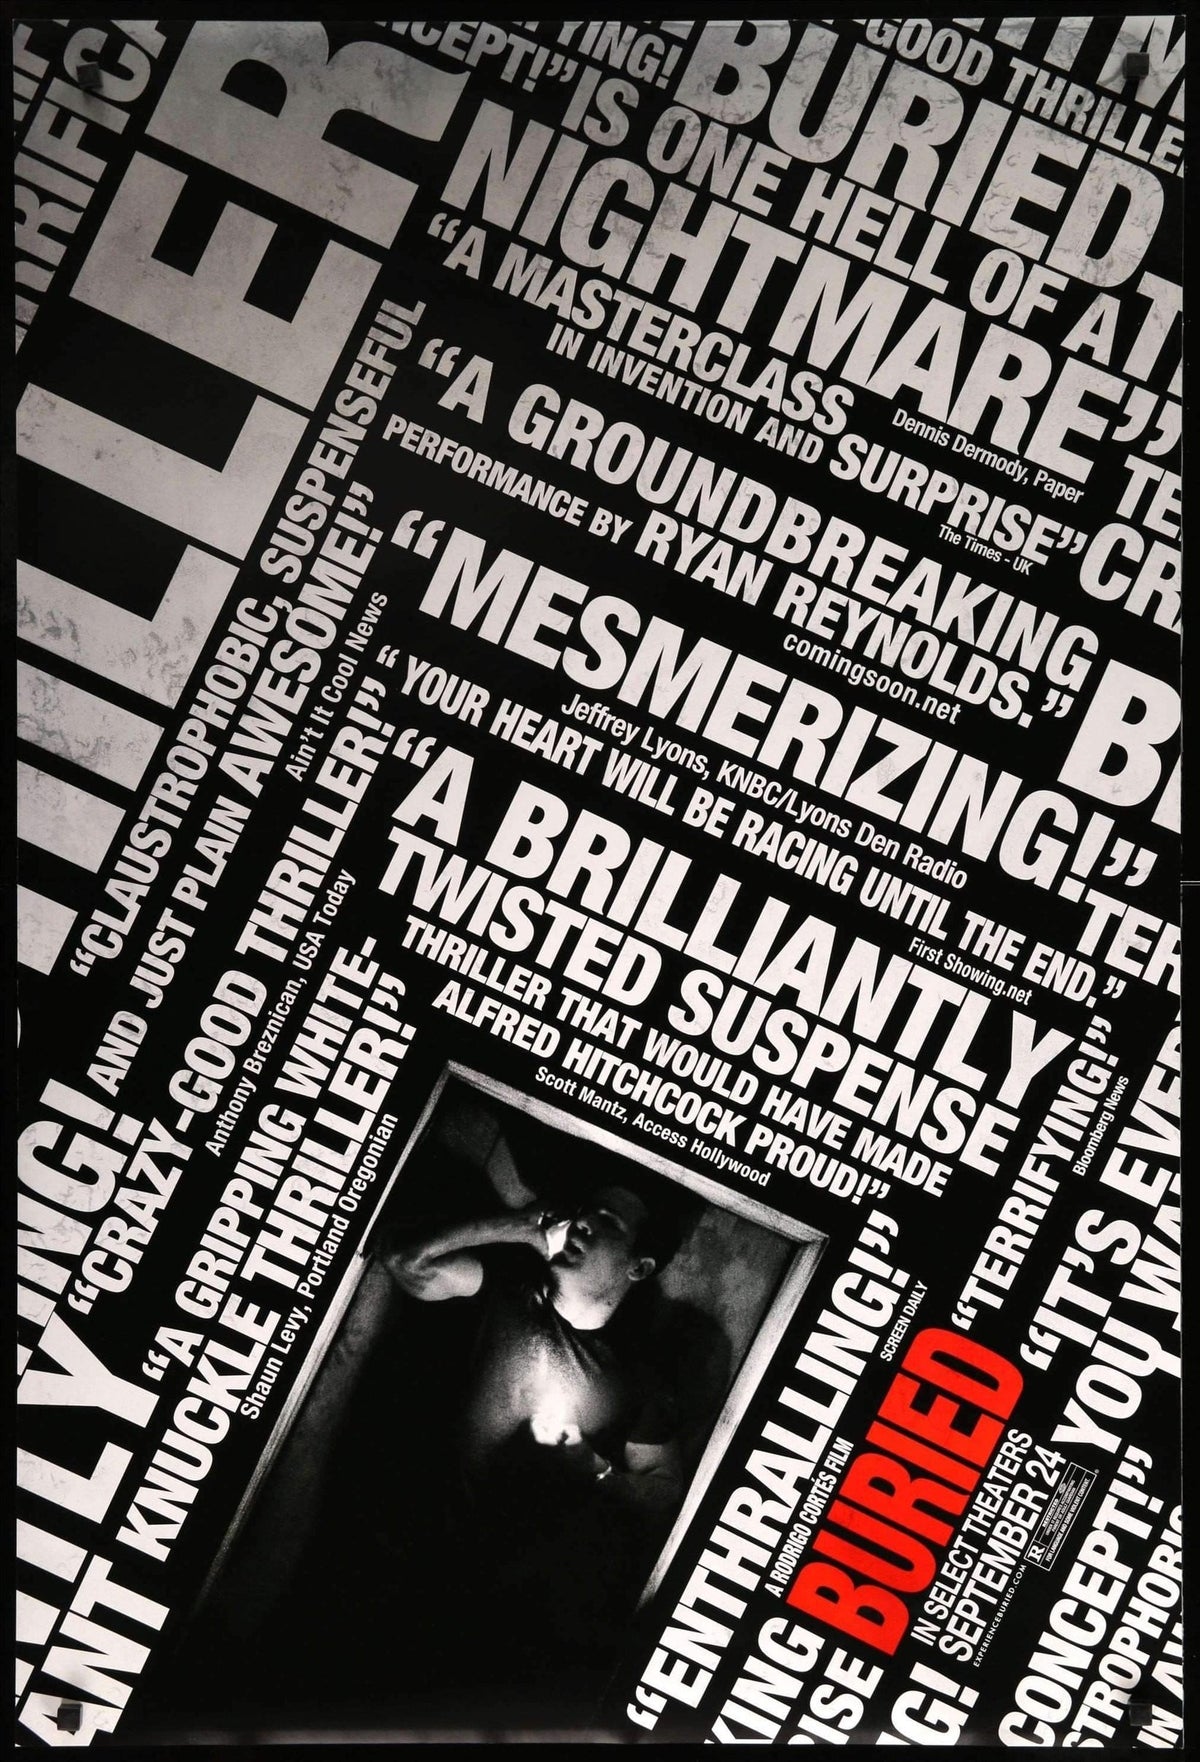 Buried (2010) original movie poster for sale at Original Film Art